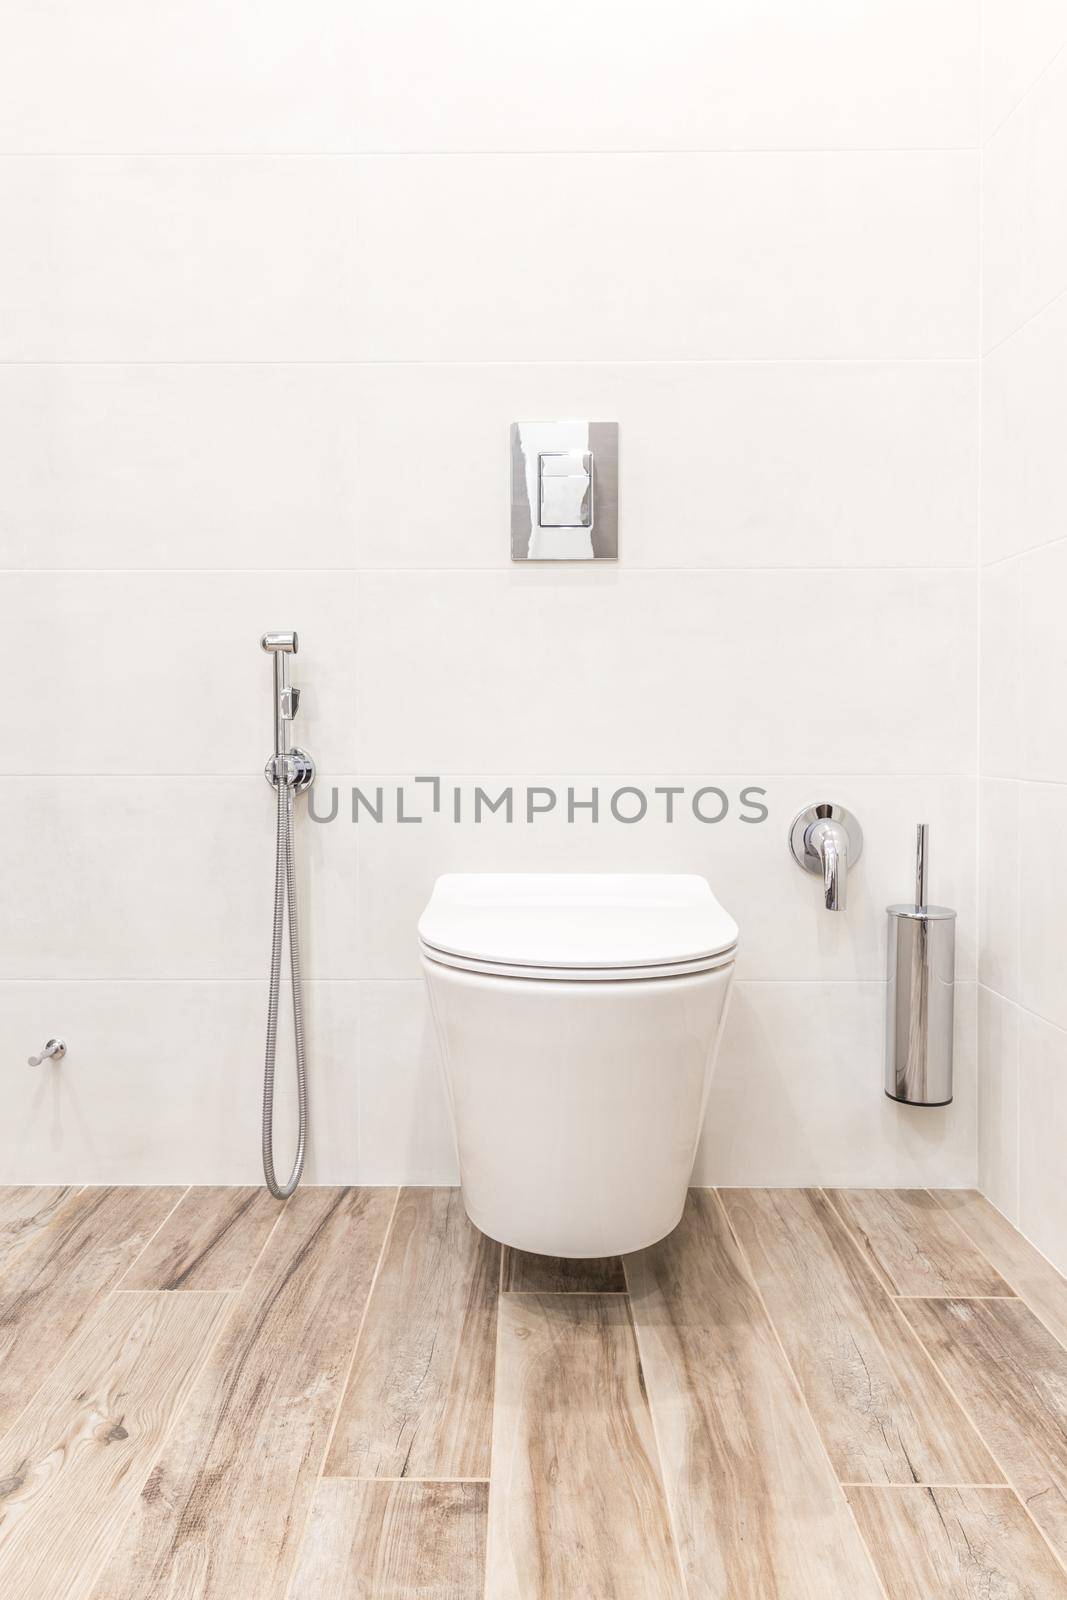 Toilet bowl in modern bathroom with wooden floor